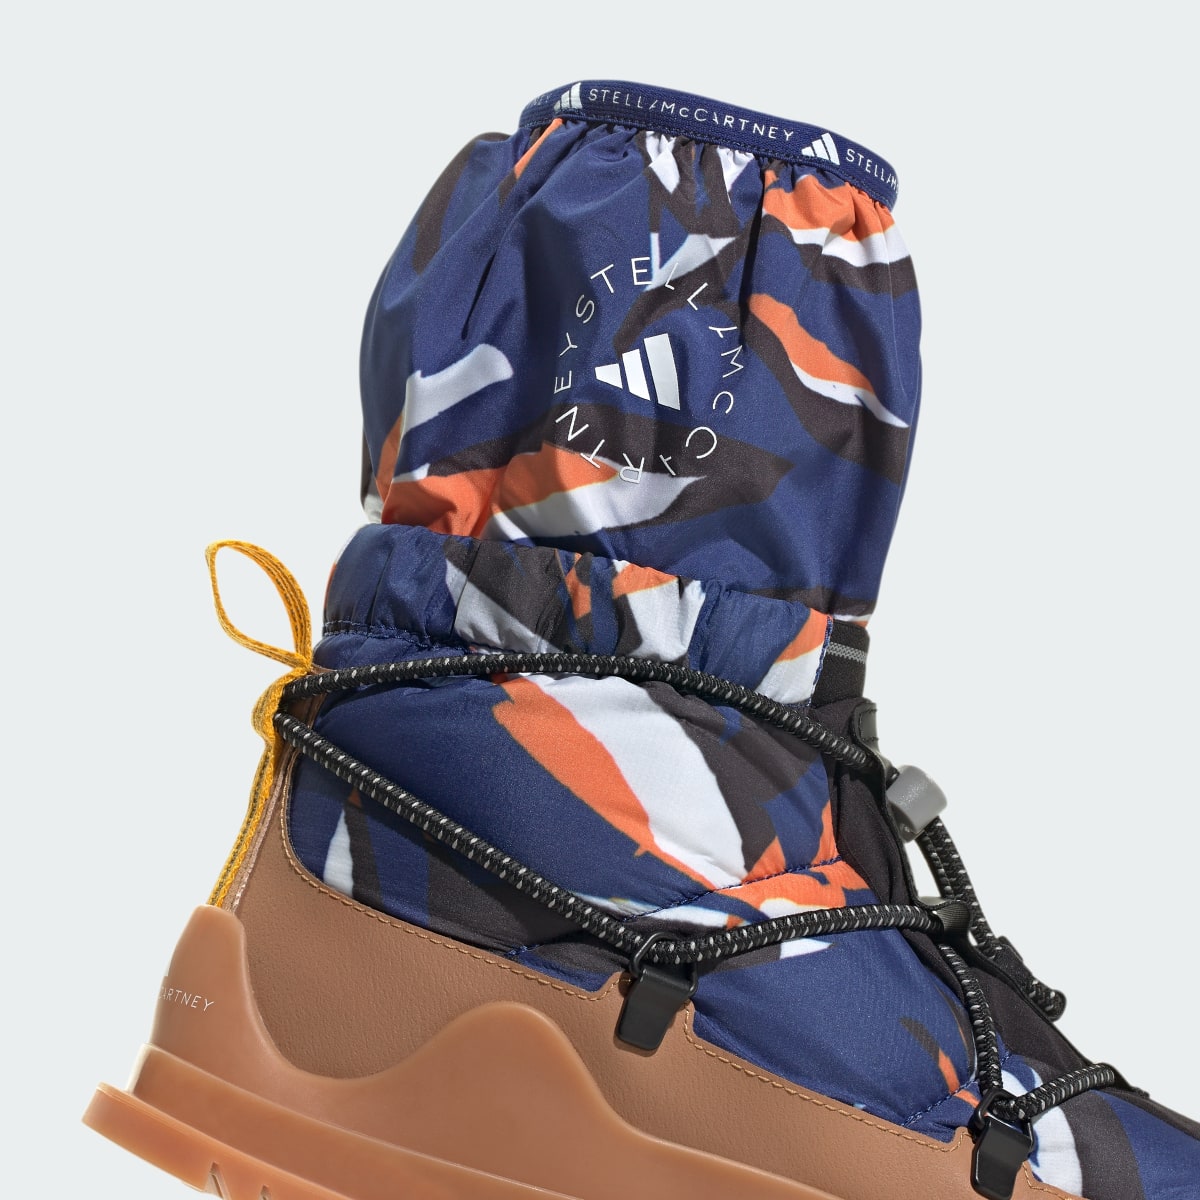 Adidas by Stella McCartney Winter Boots. 10